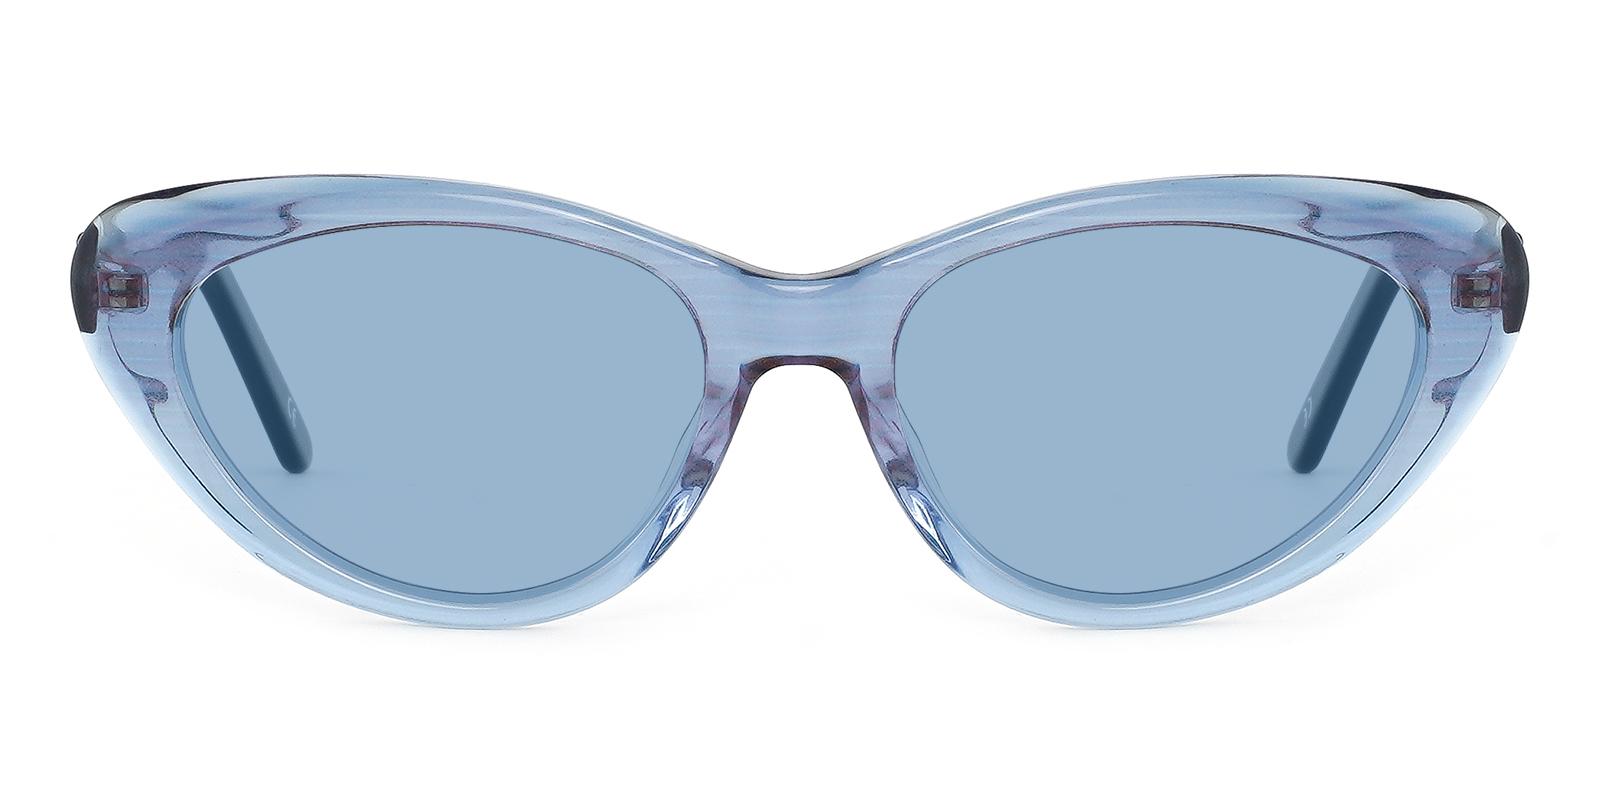 Botanist Blue Acetate SpringHinges , Sunglasses , UniversalBridgeFit Frames from ABBE Glasses